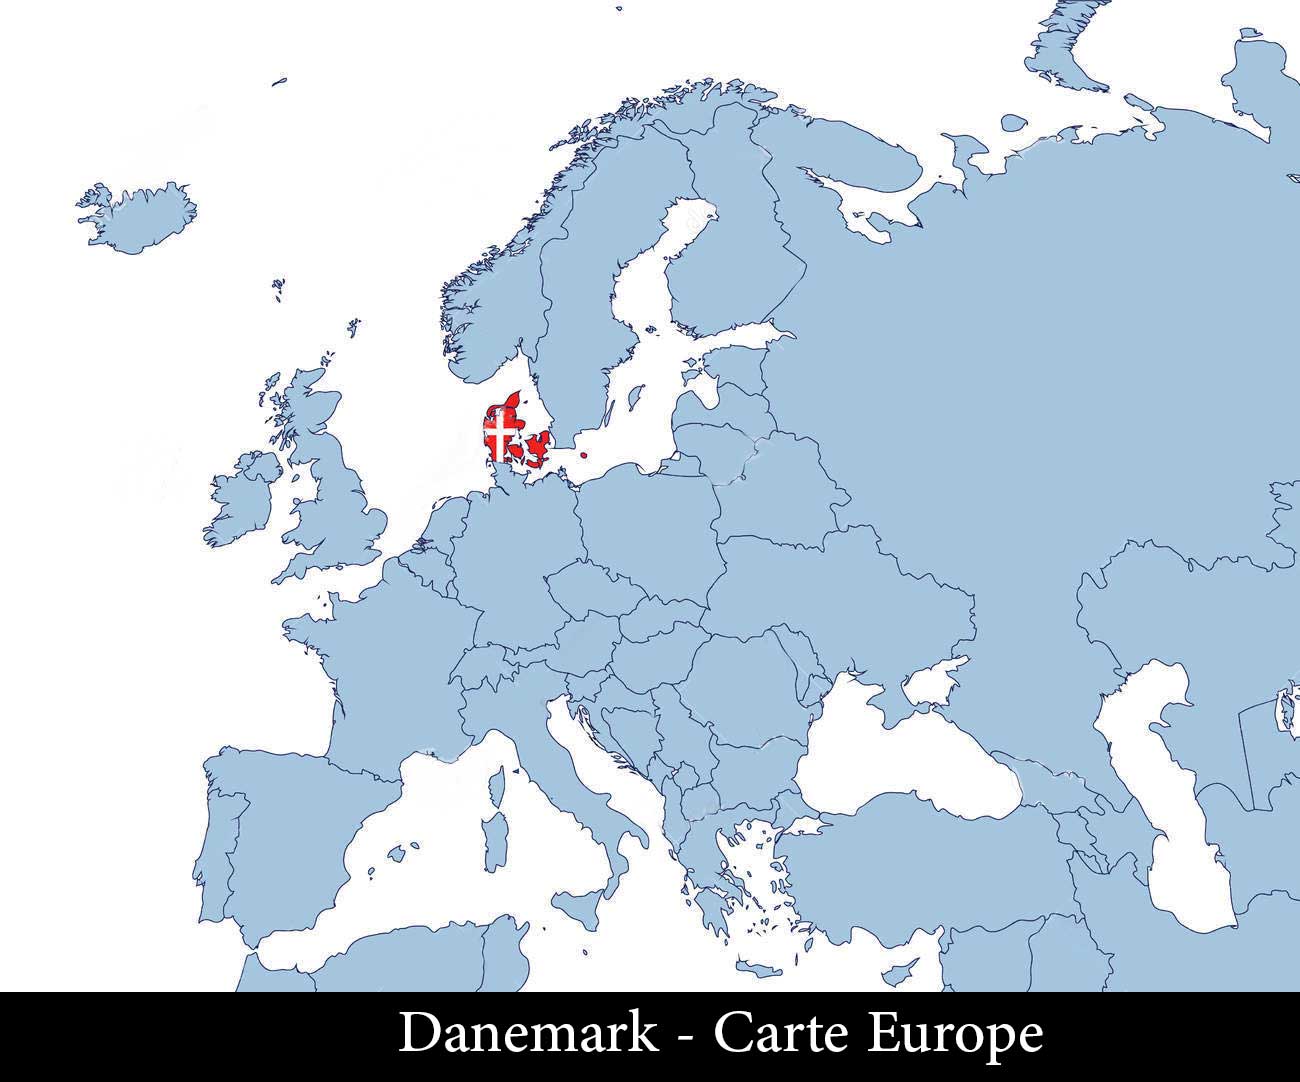 Danemark – Carte Europe